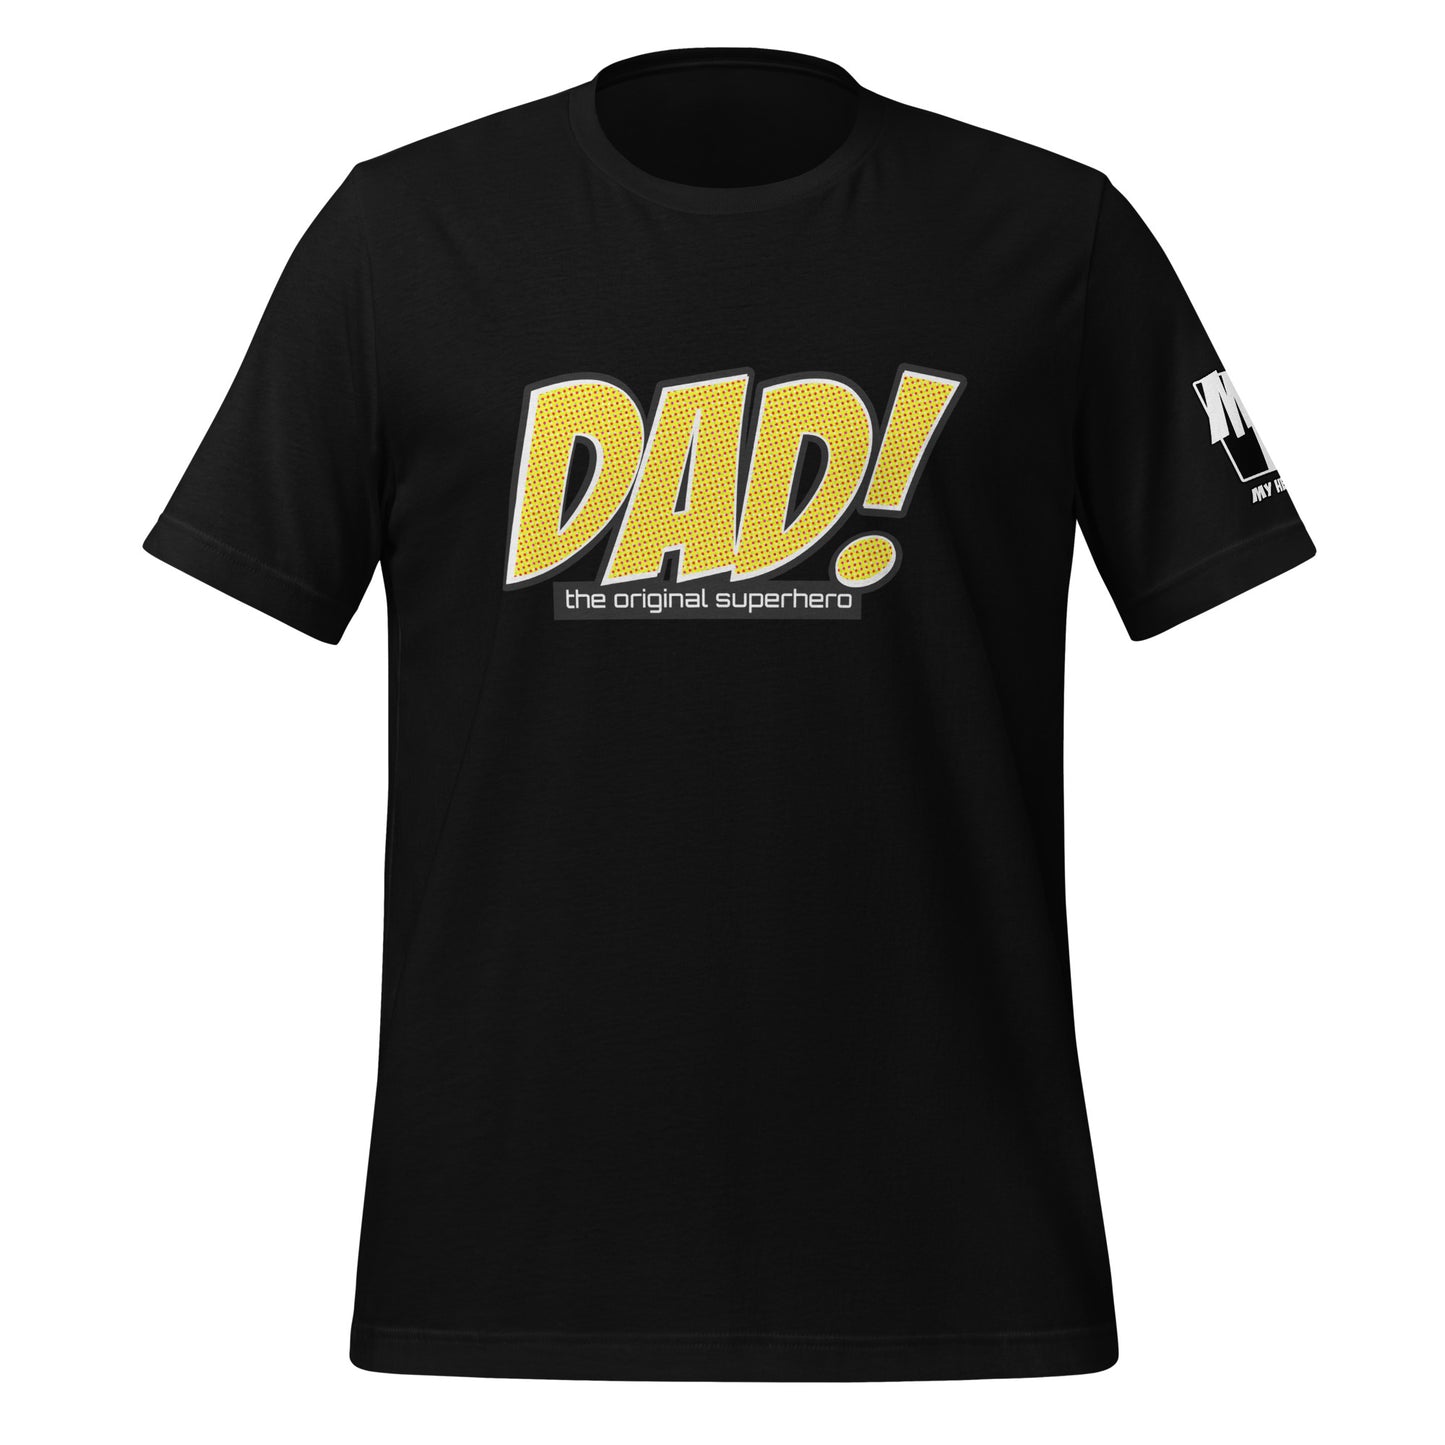 DAD! the original ... T-Shirt